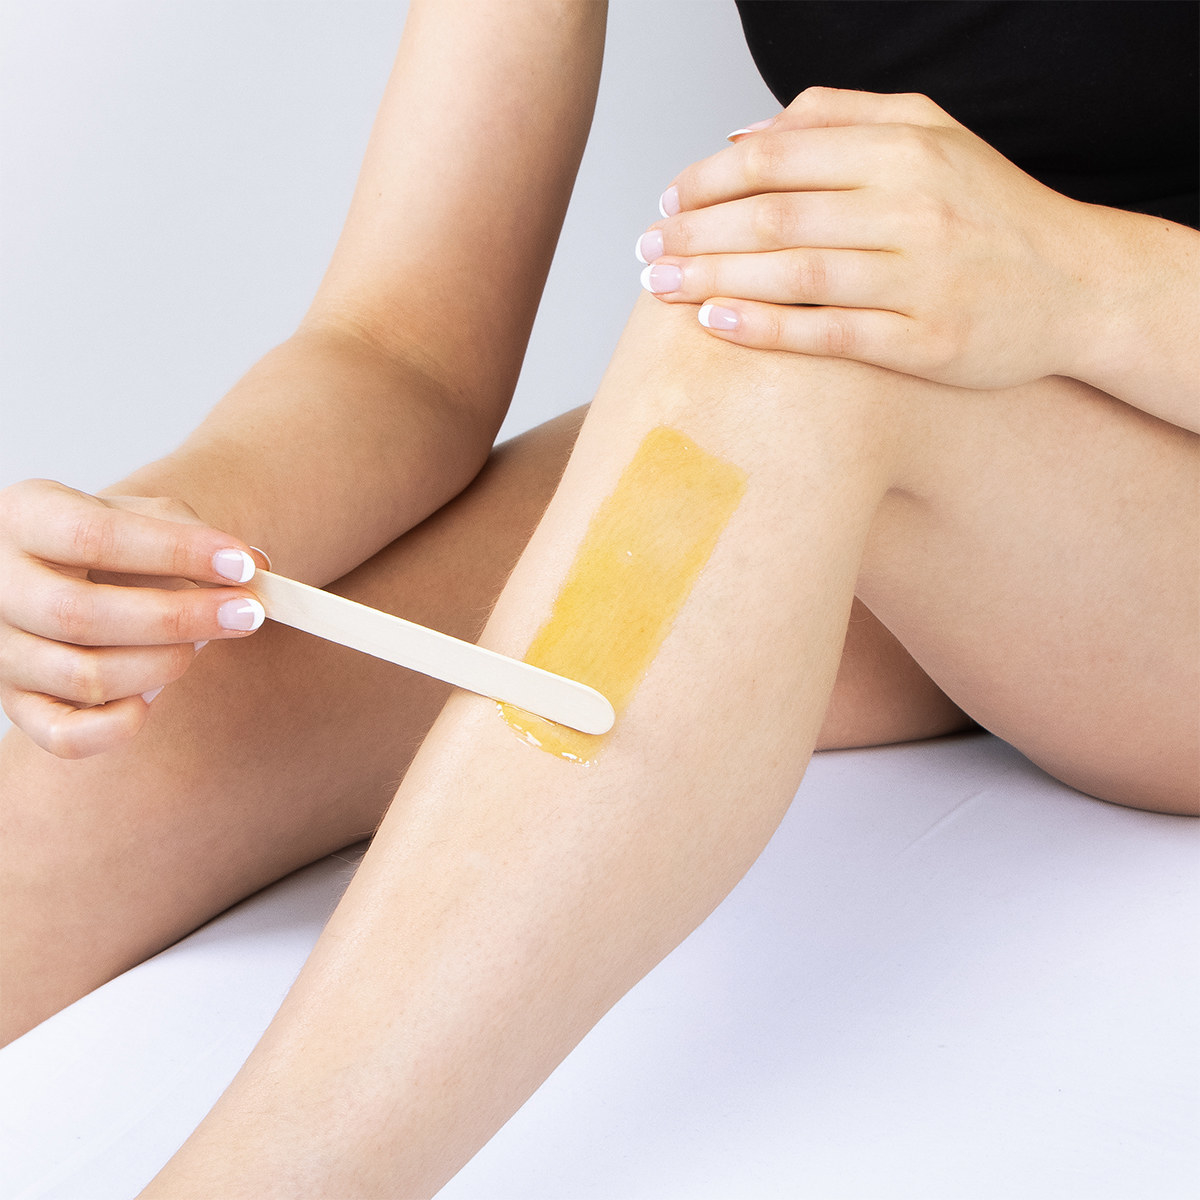 A person applying wax to their leg